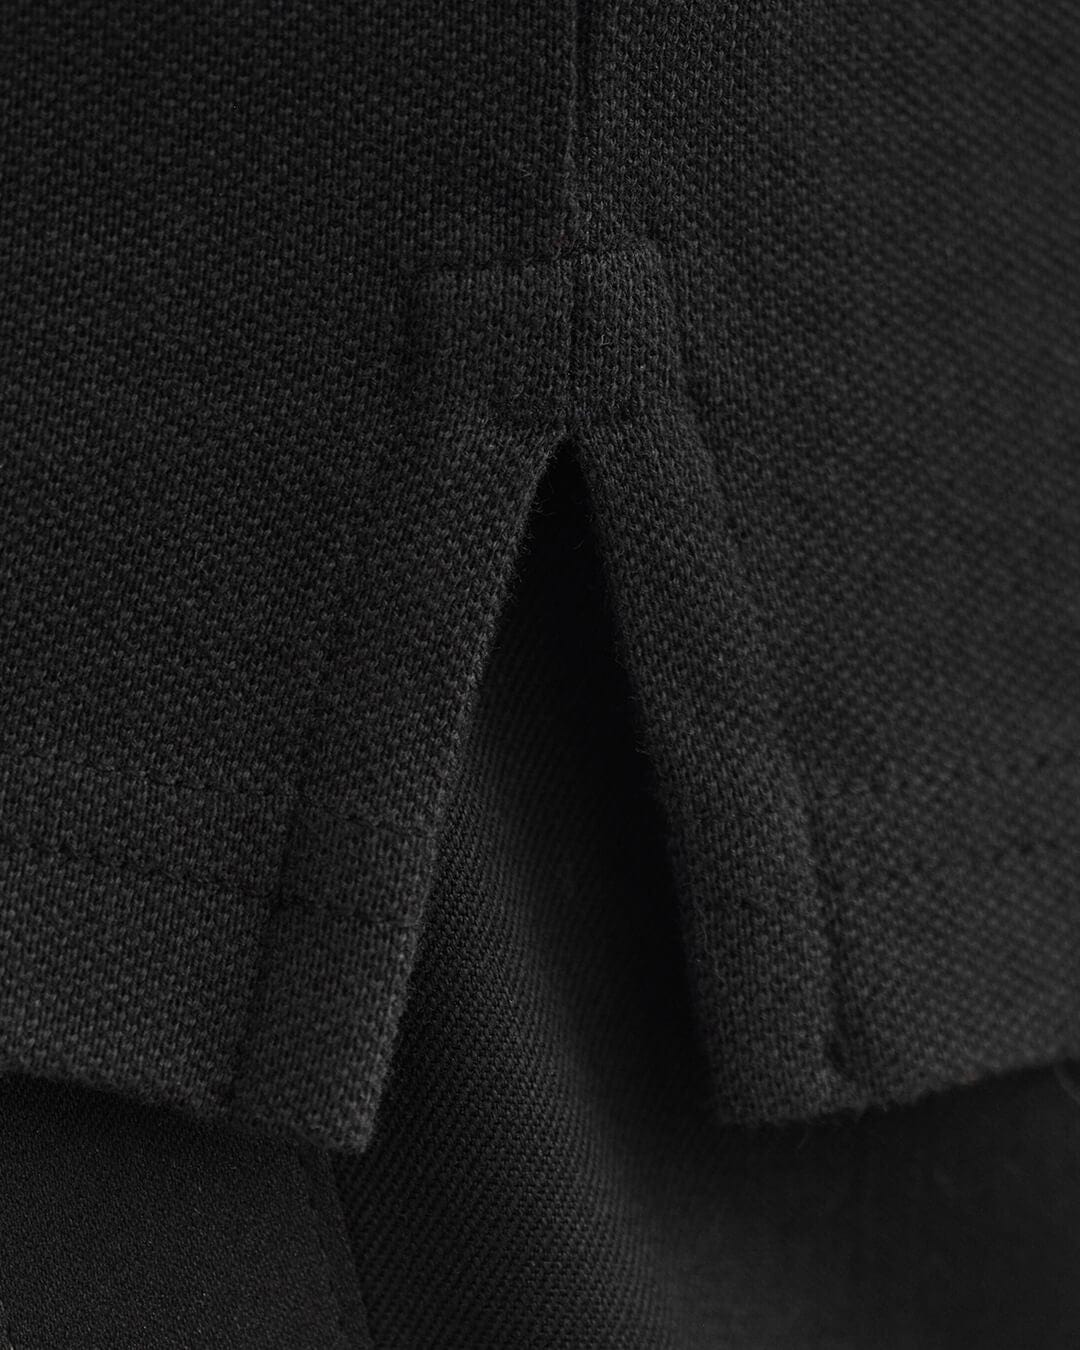 Gant Polo Shirts Gant Original Pique Black Polo Shirt